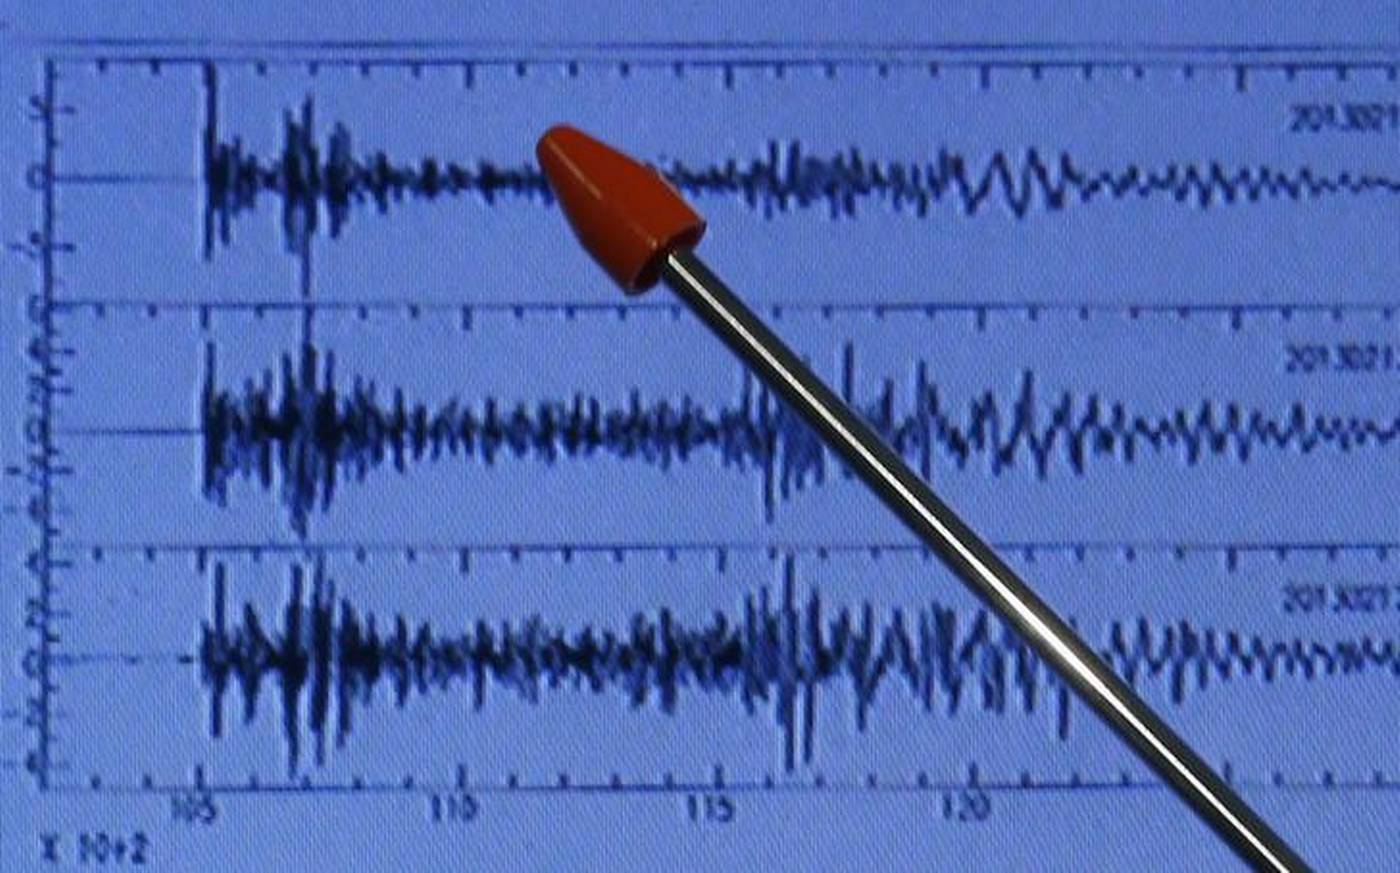 Magnitude 5.0 tremor shakes Chilean capital, no damage reported